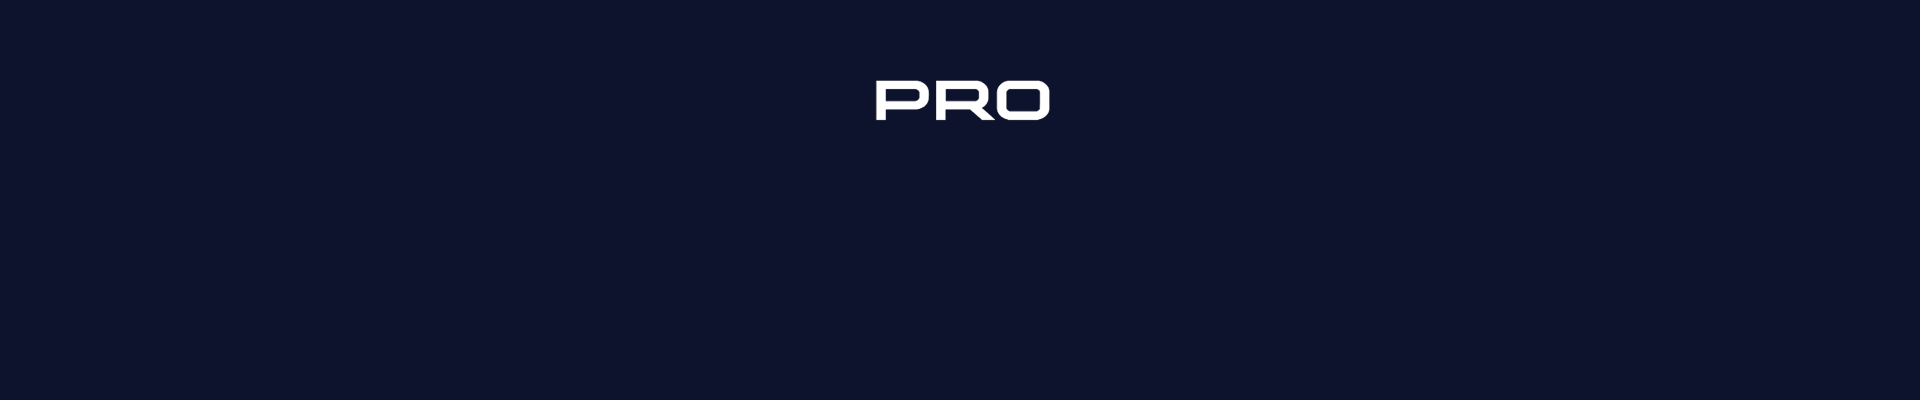 Dark blue banner with 'Pro' text | Gillette UK